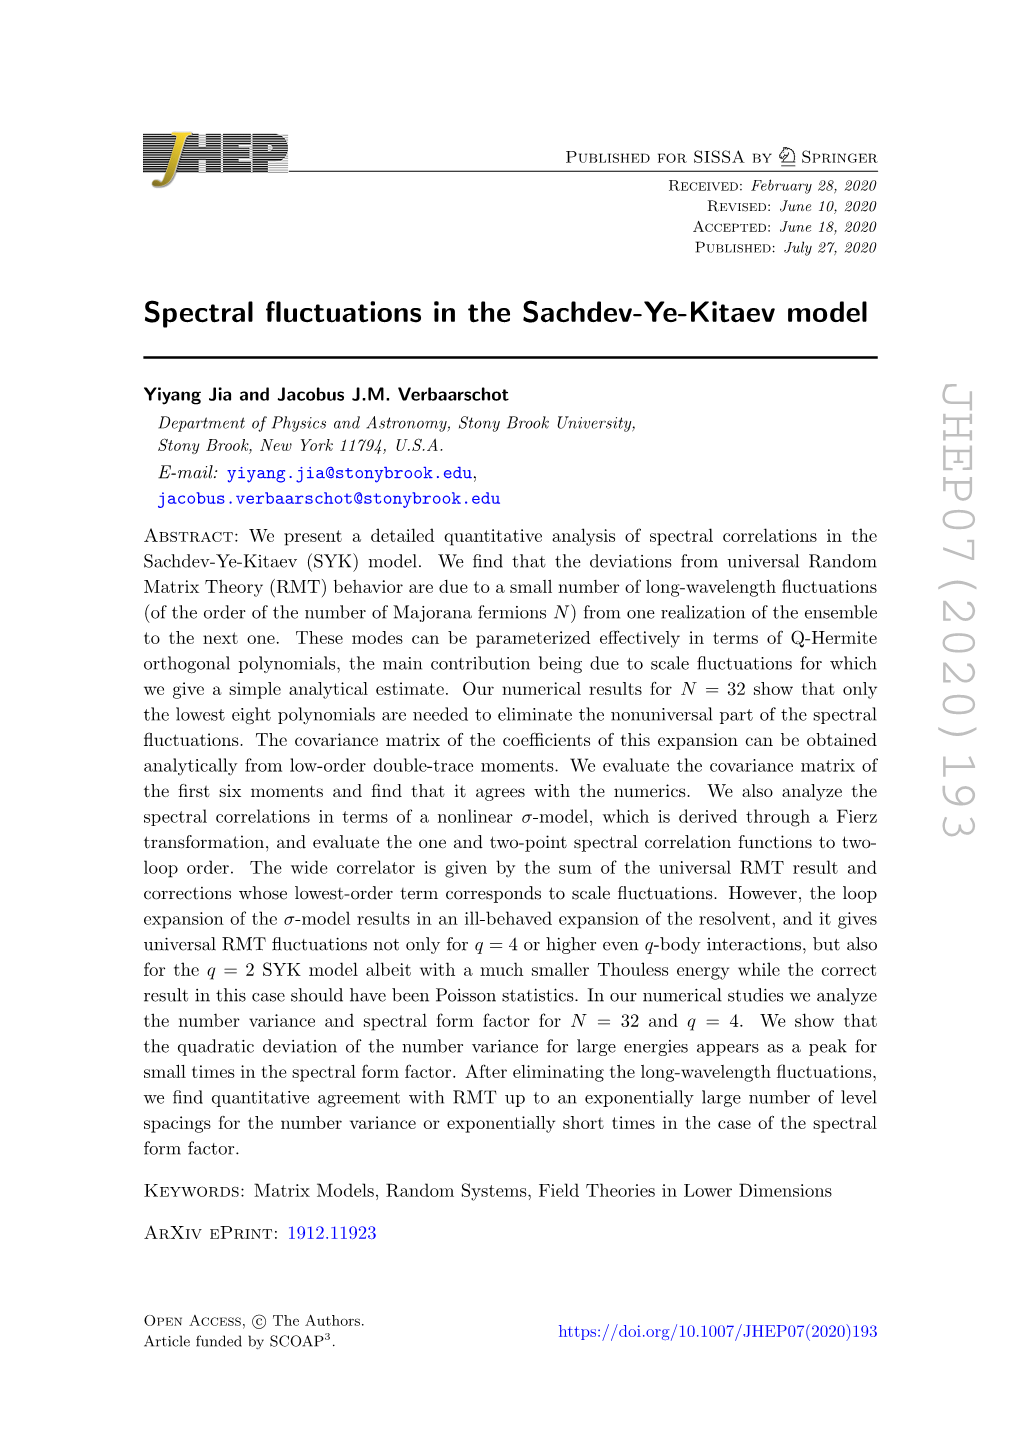 Spectral Fluctuations in the Sachdev-Ye-Kitaev Model